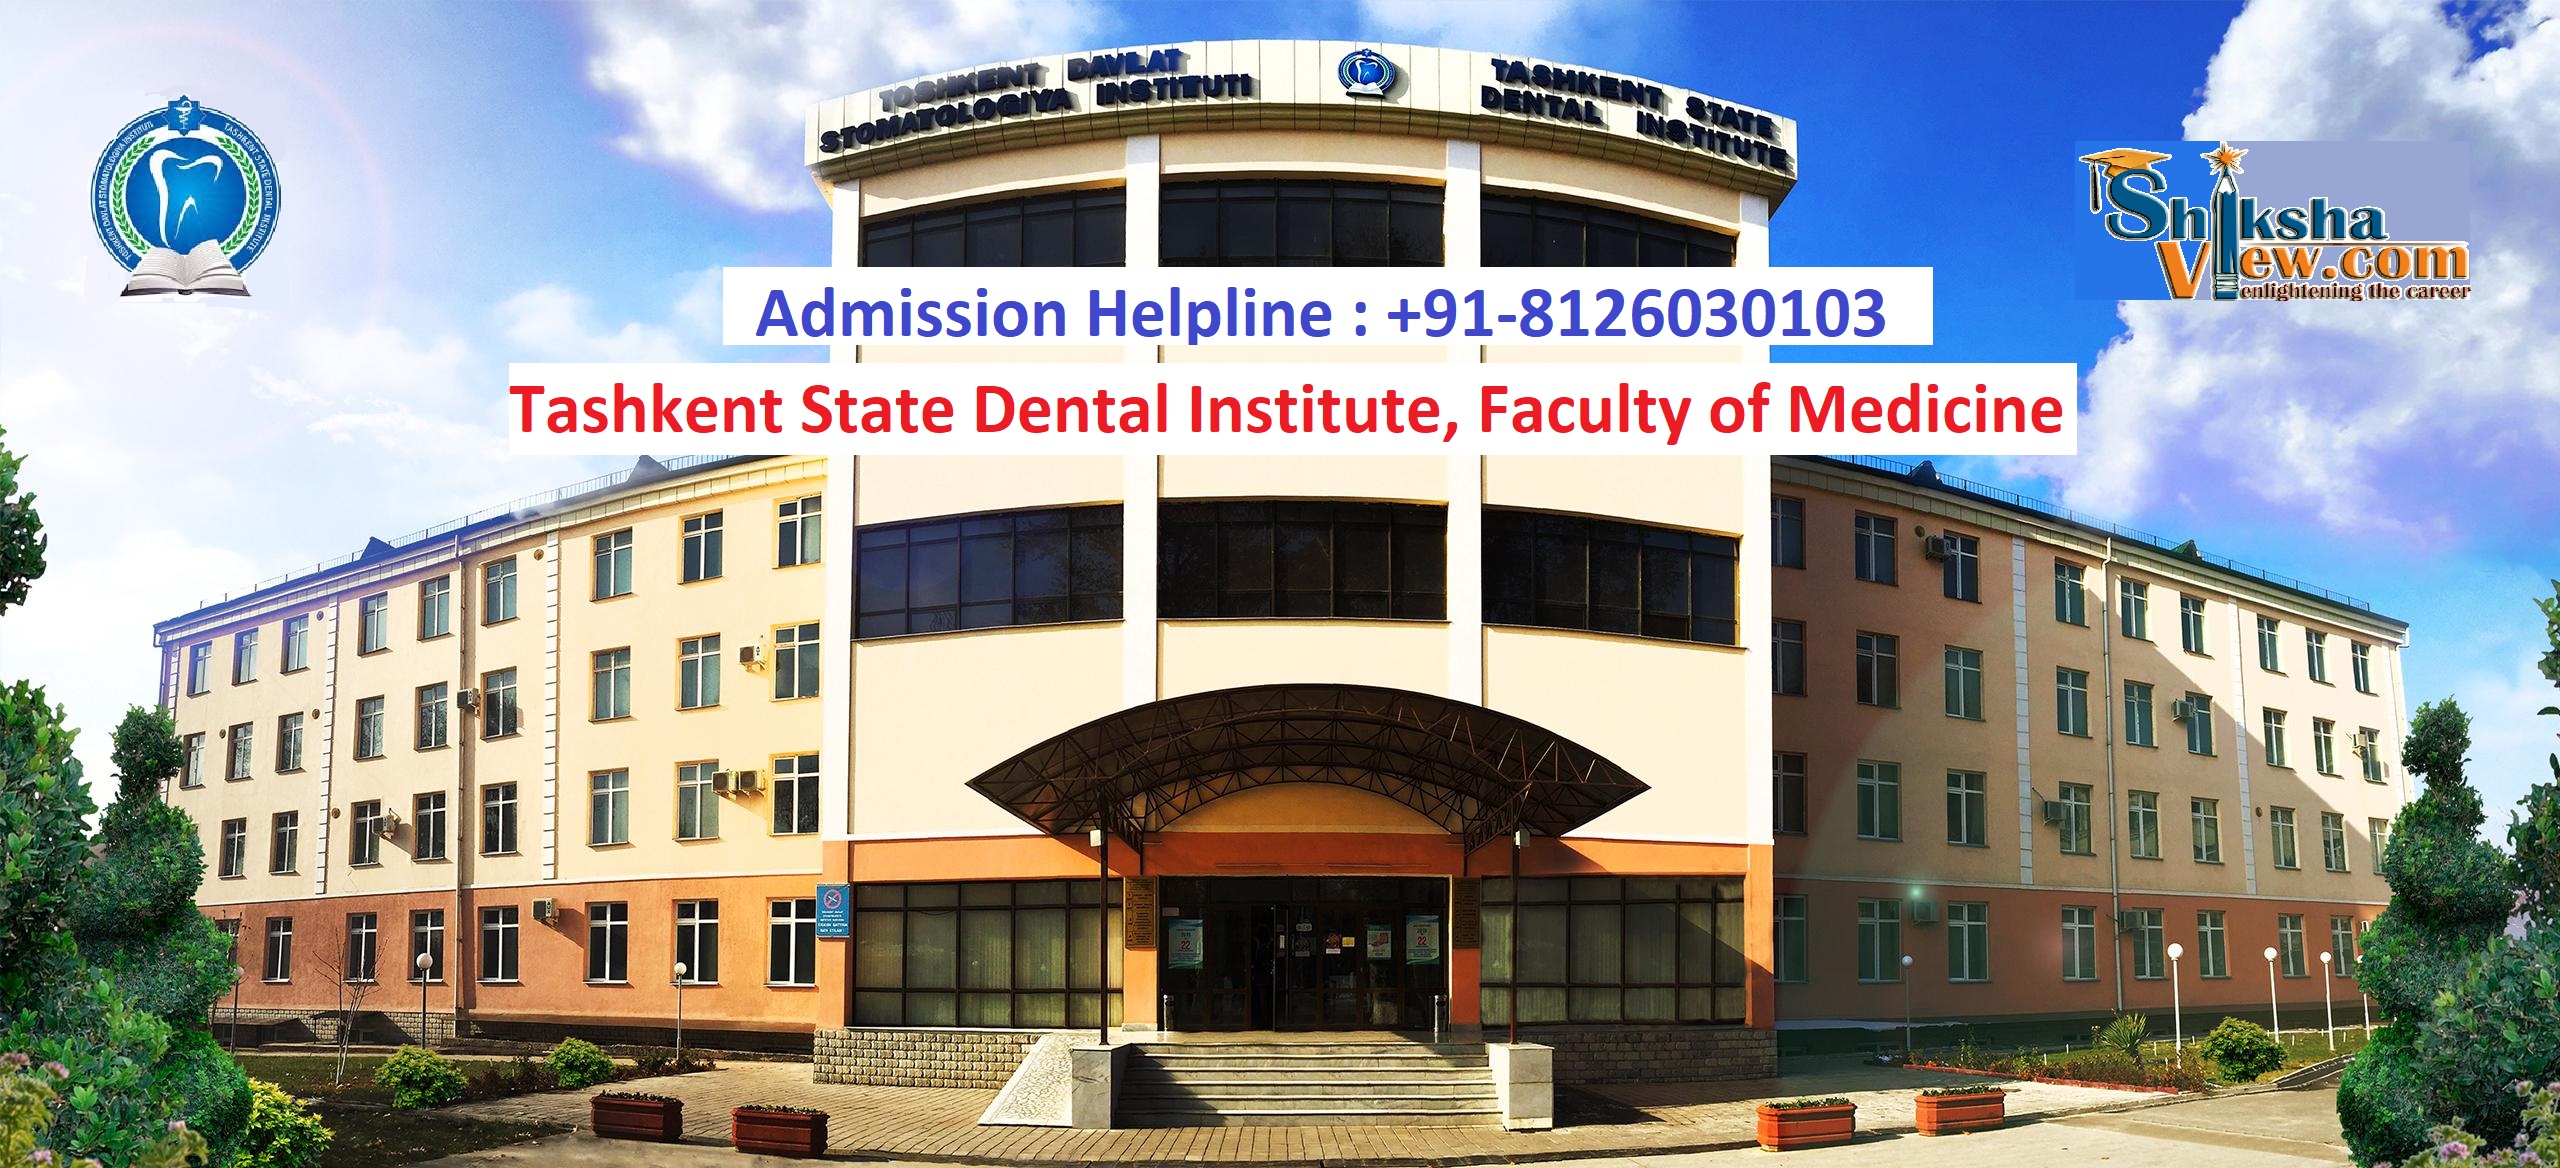 Tashkent-State-Dental-Institute-Faculty-of-Medicine